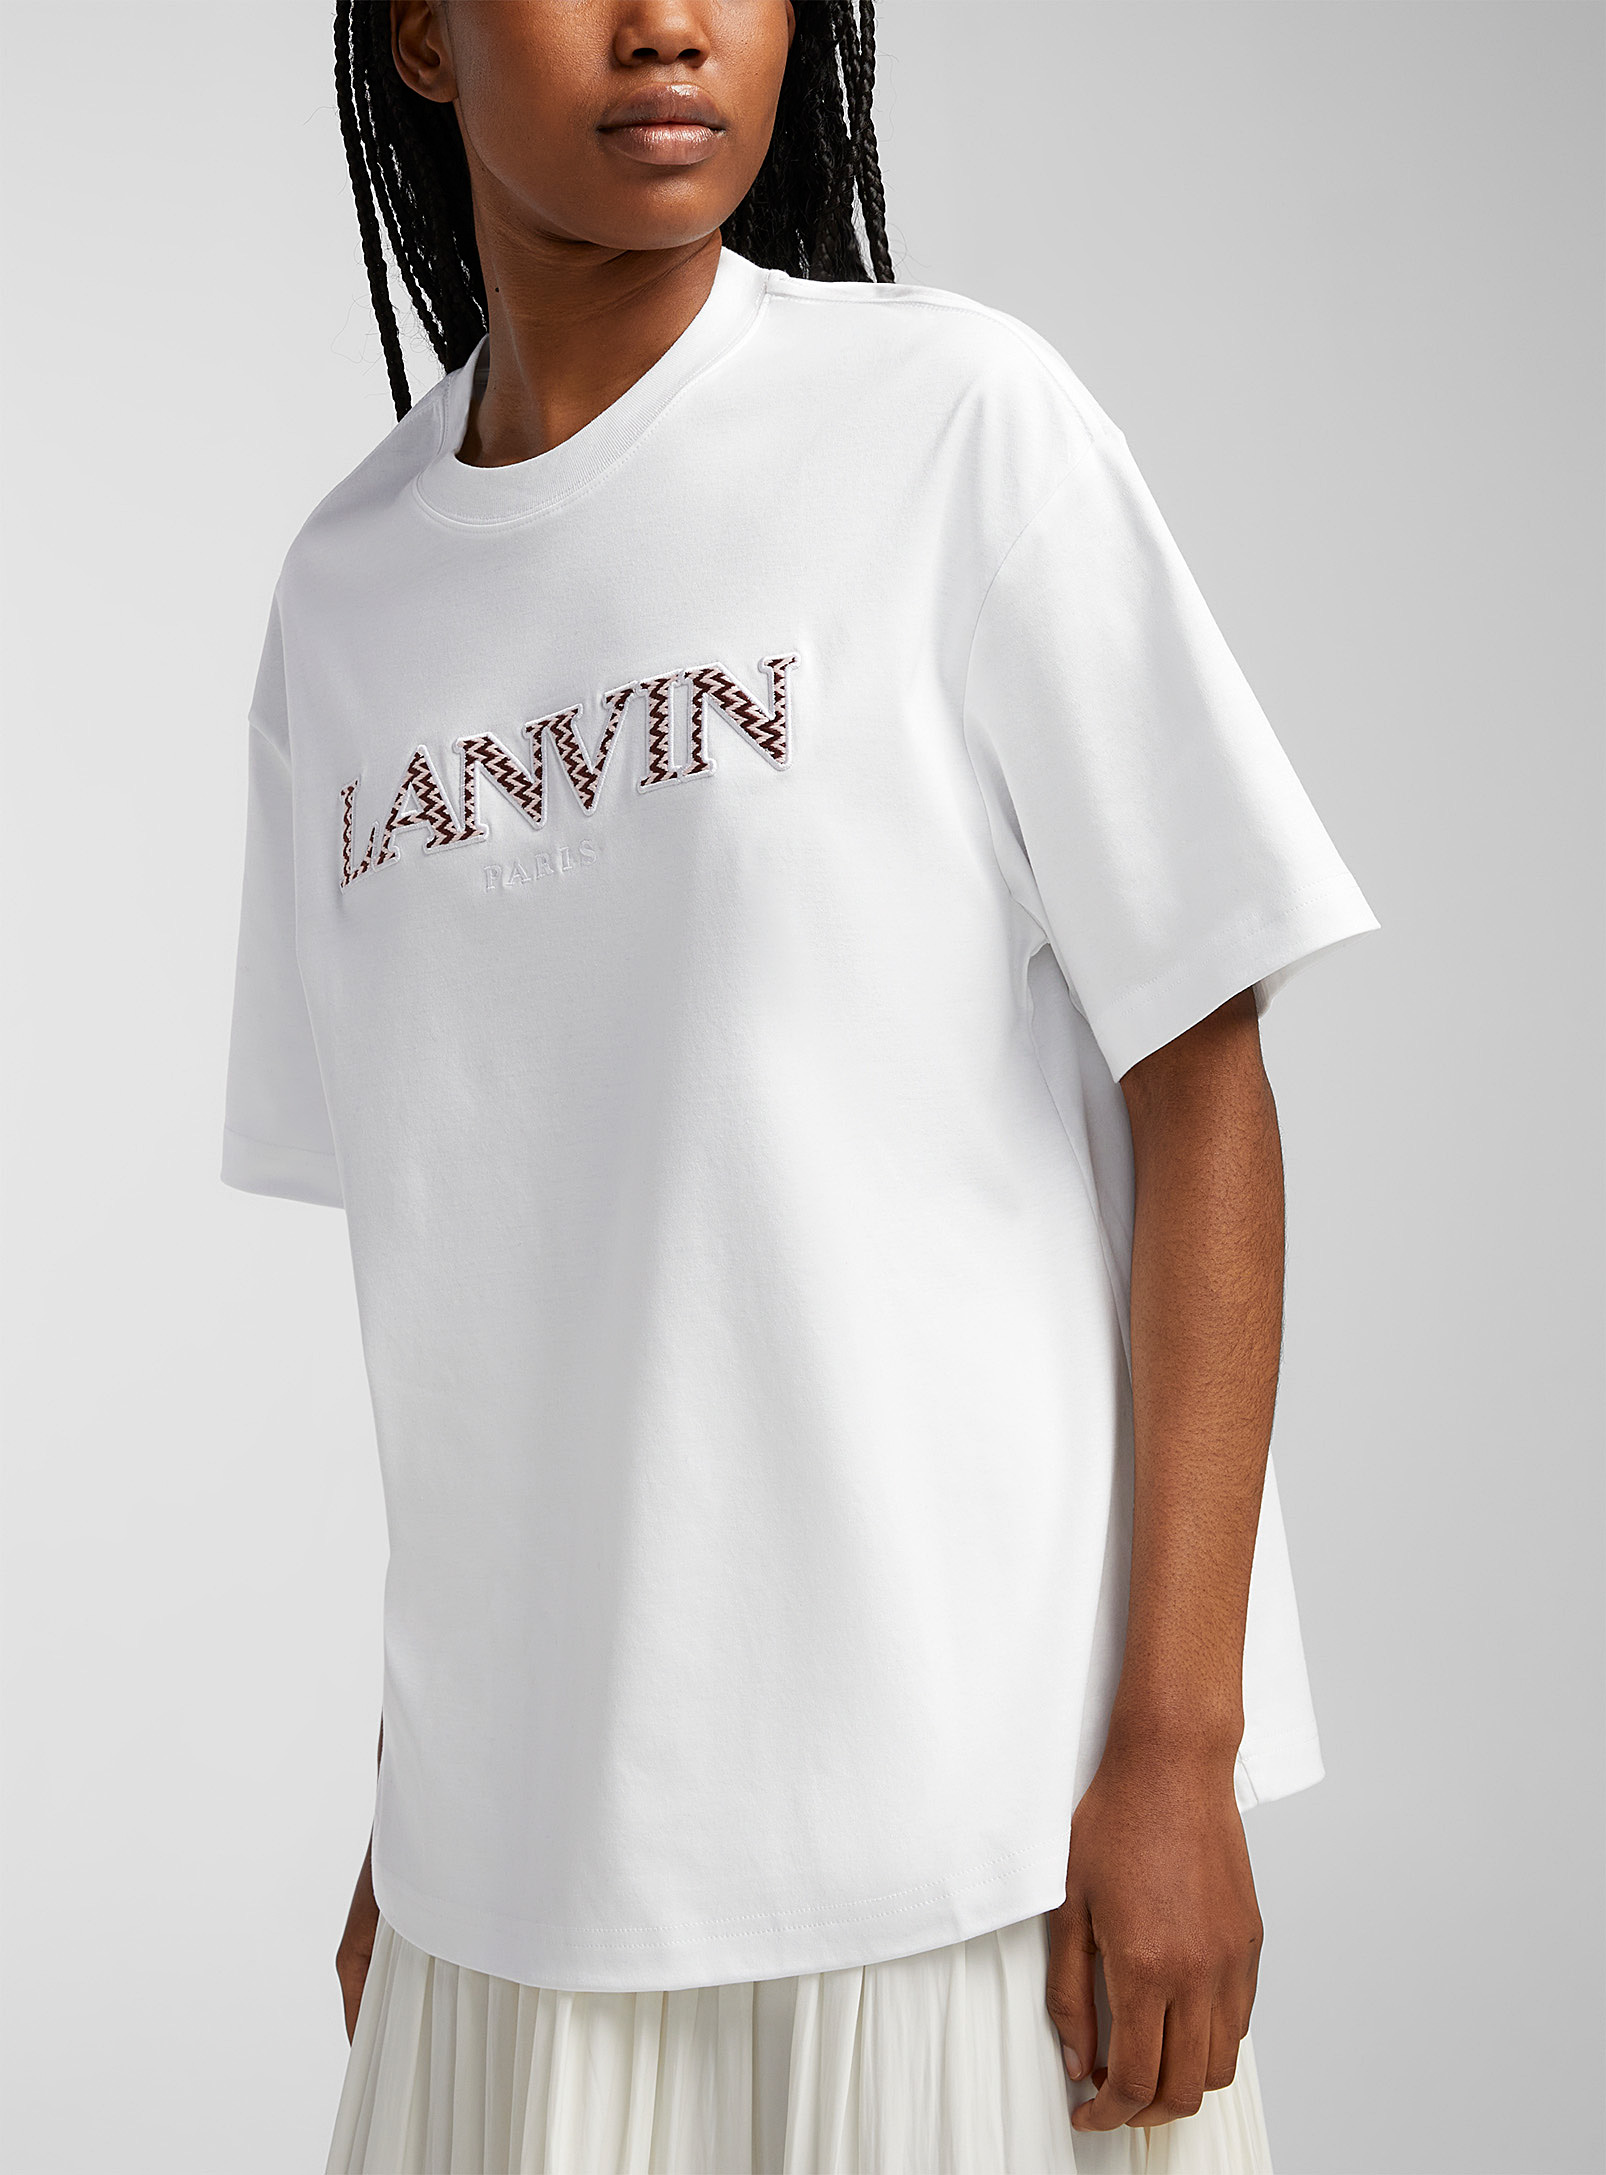 Lanvin - Le t-shirt logo chevrons